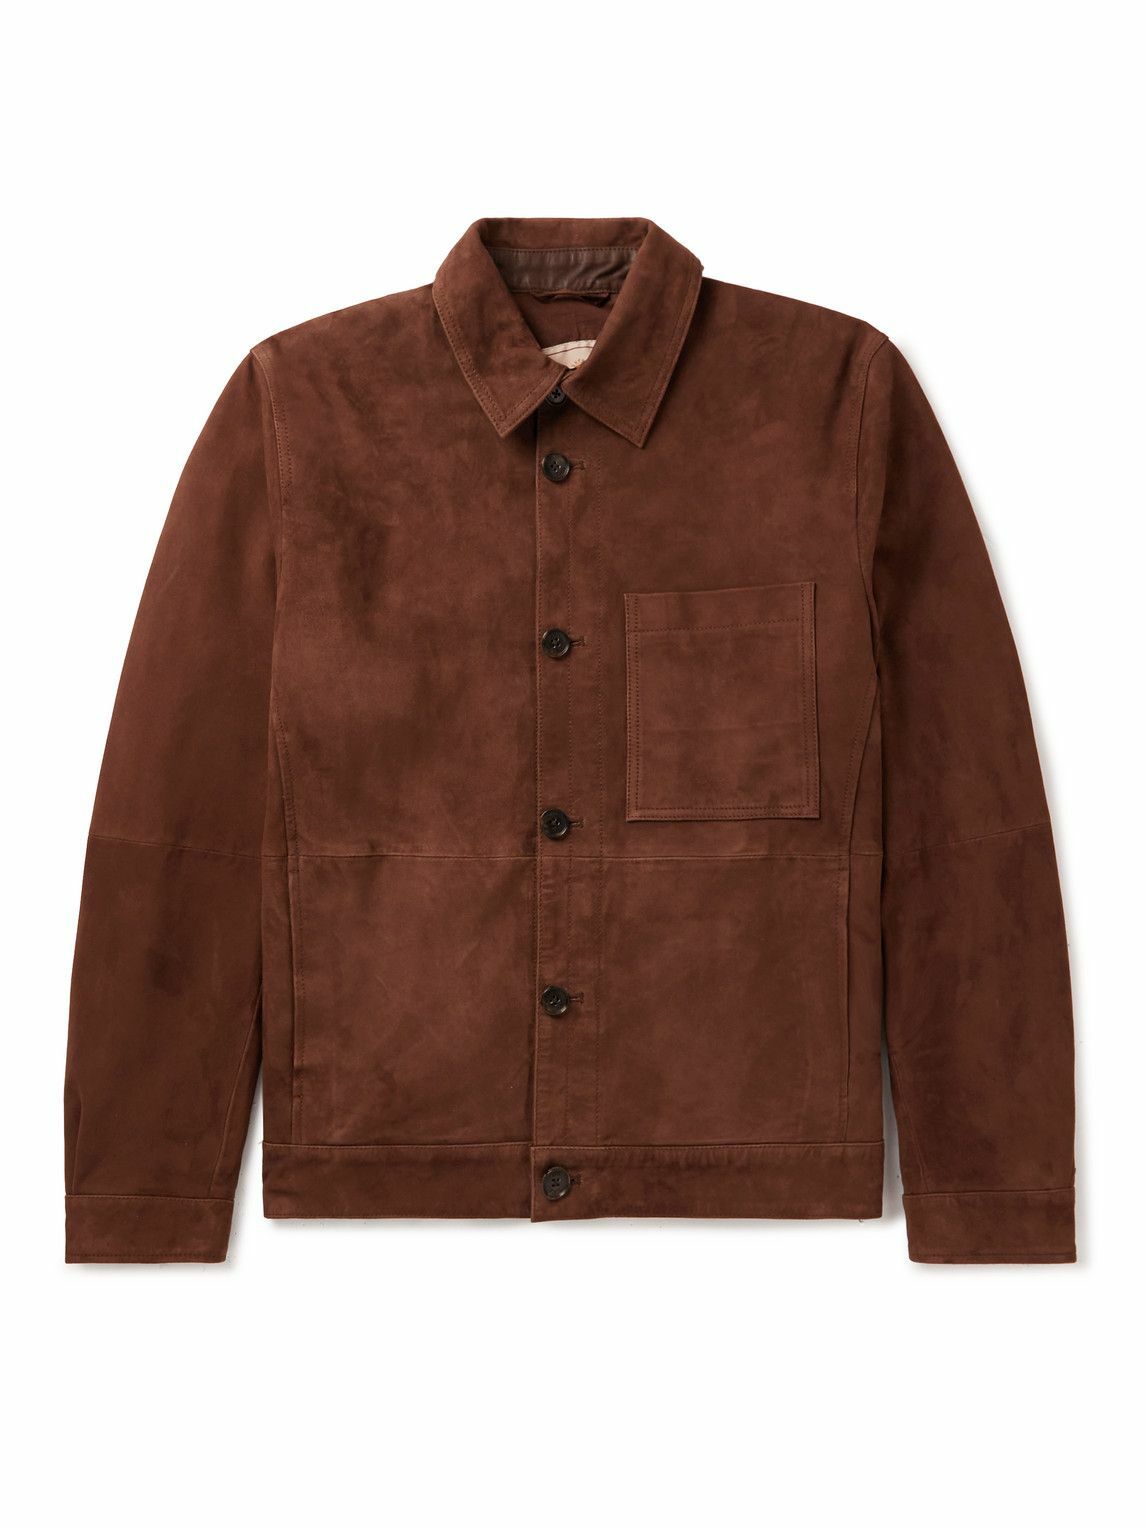 Baracuta - Suede Shirt Jacket - Brown Baracuta